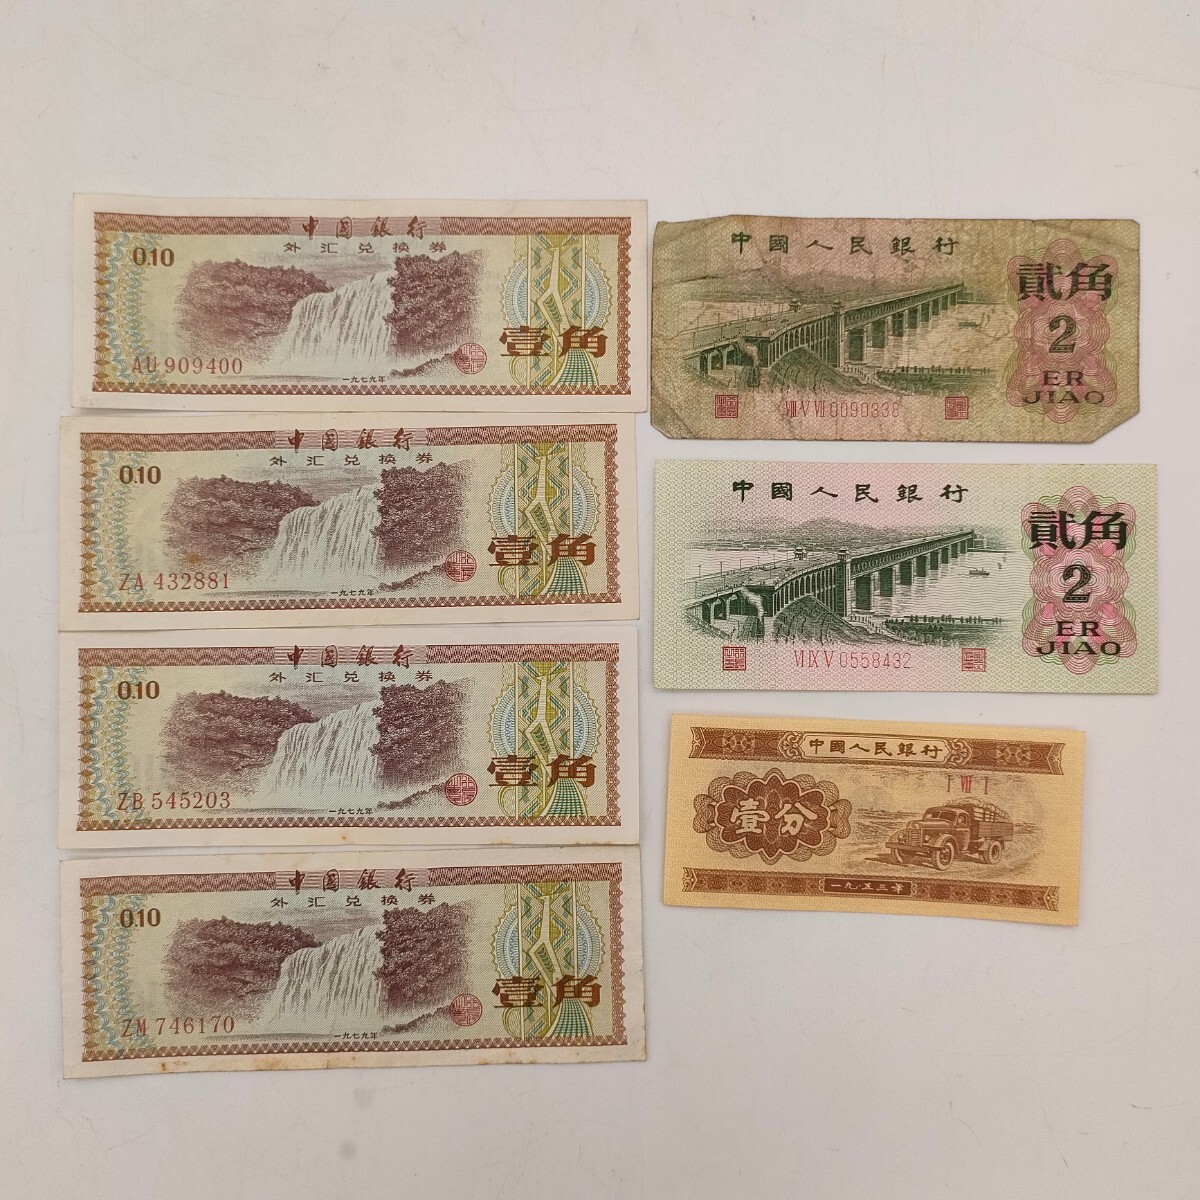  China банкноты ... угол вне ... талон и т.п. China Bank старый банкноты зарубежный банкноты (3)